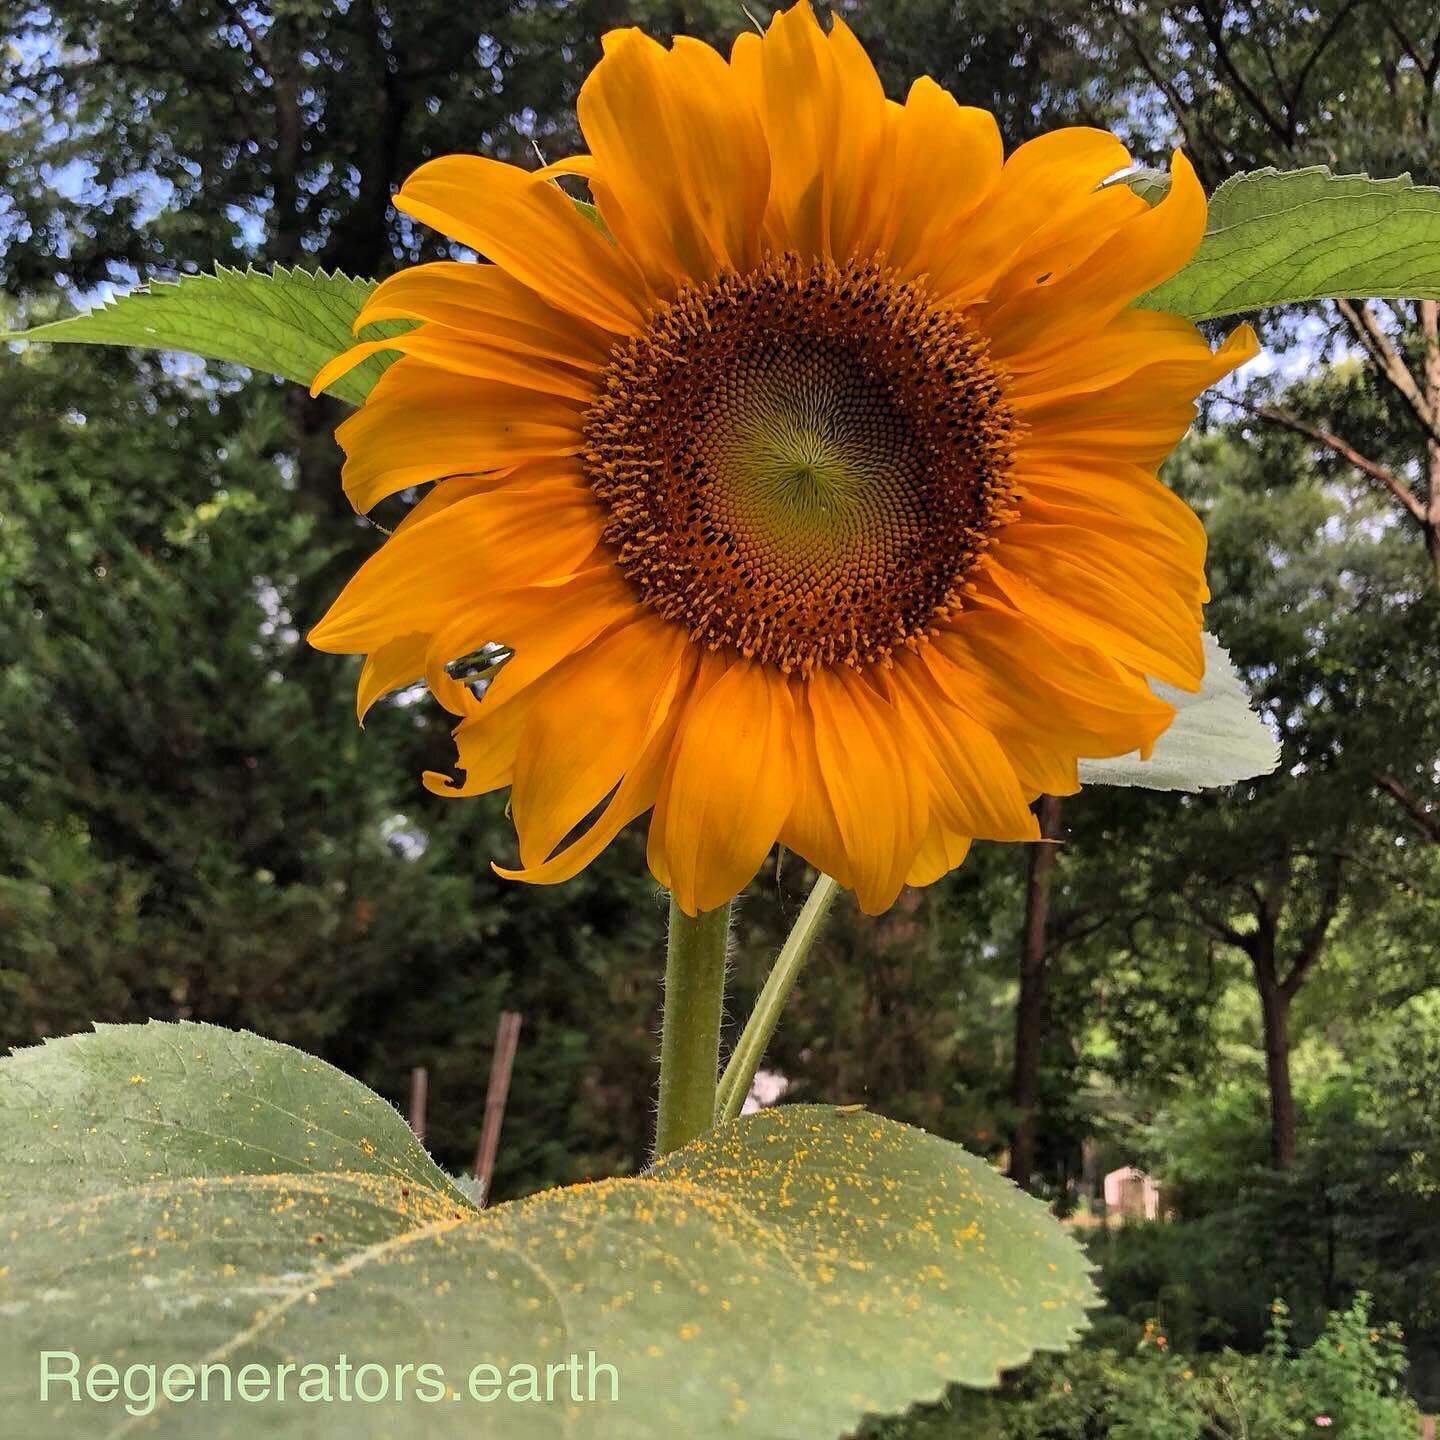 #forestheights #sunflower